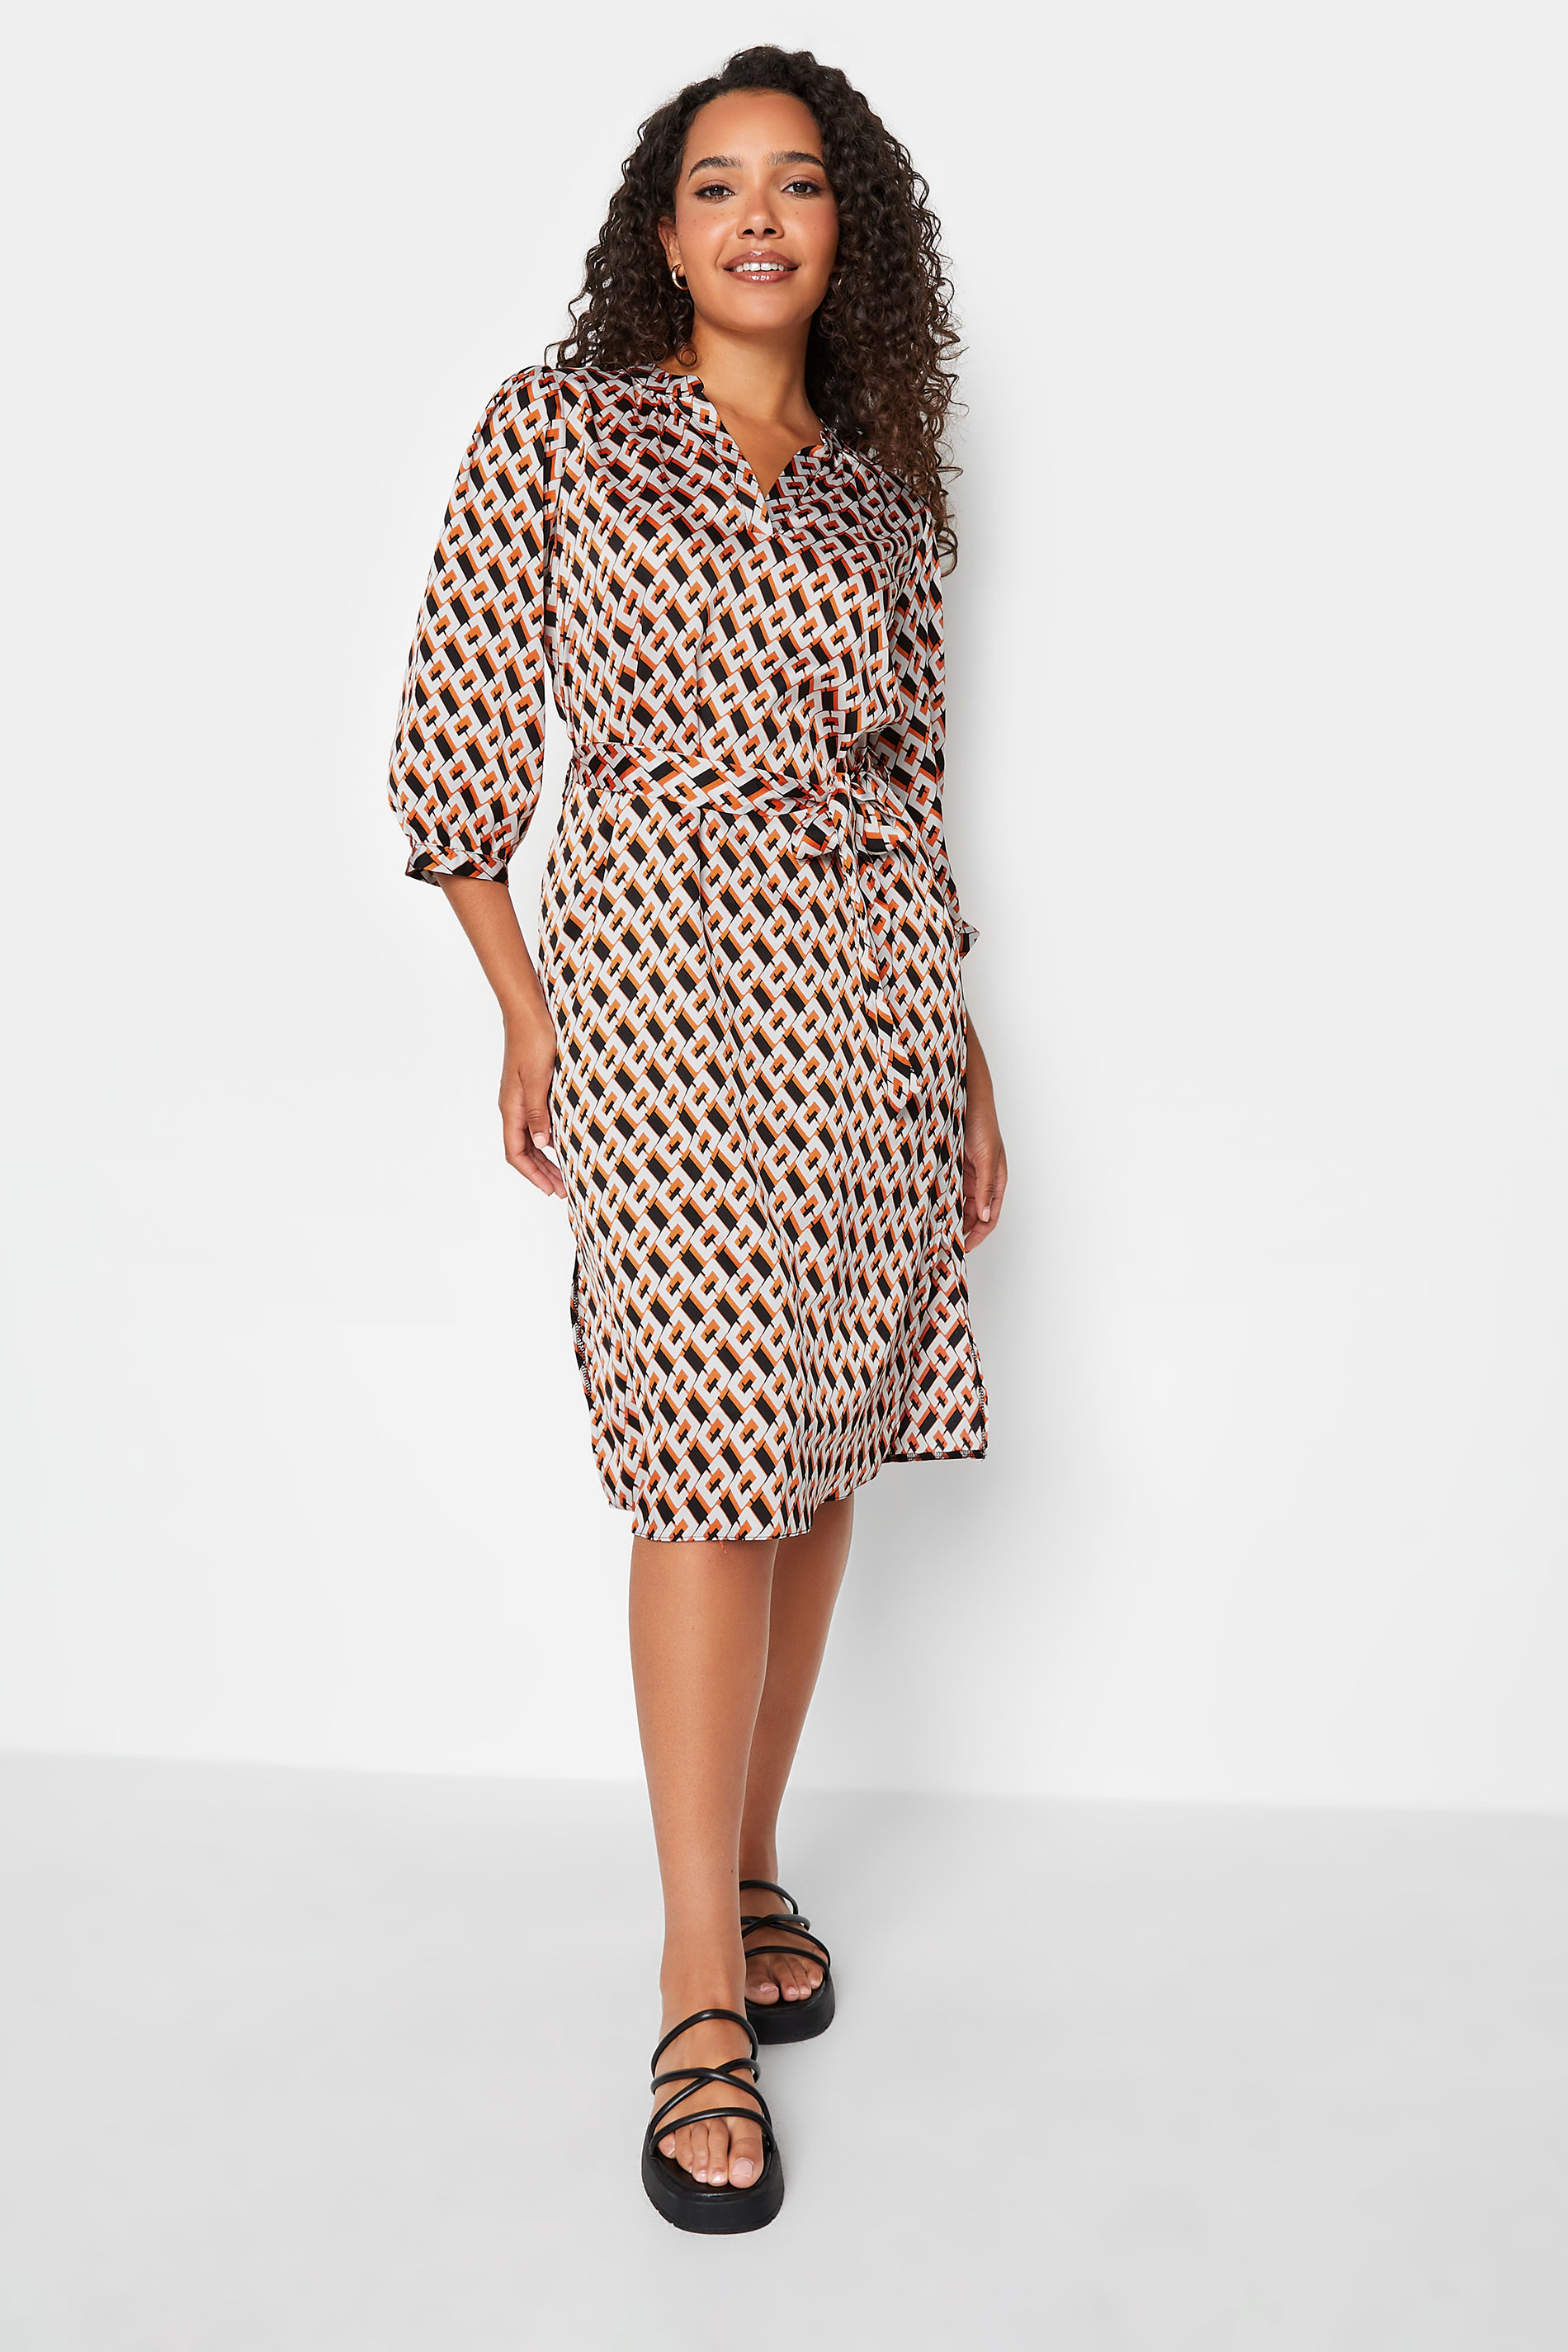 M&Co Orange Satin Geometric Print Tunic Dress | M&Co 1